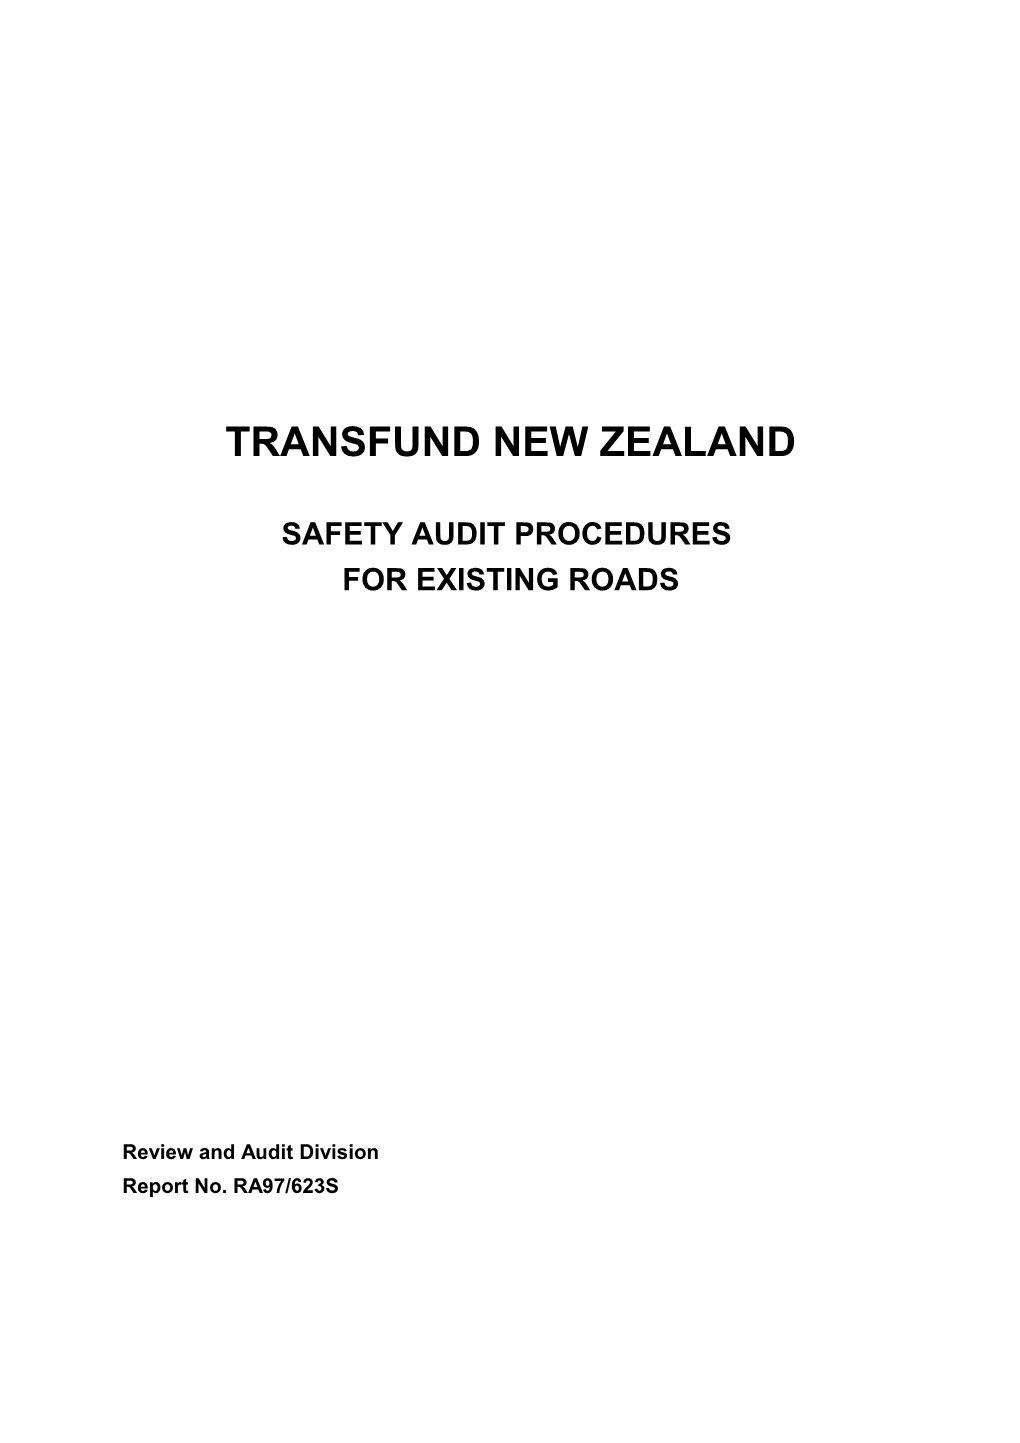 Safety Audit Procedures for Existing Roads